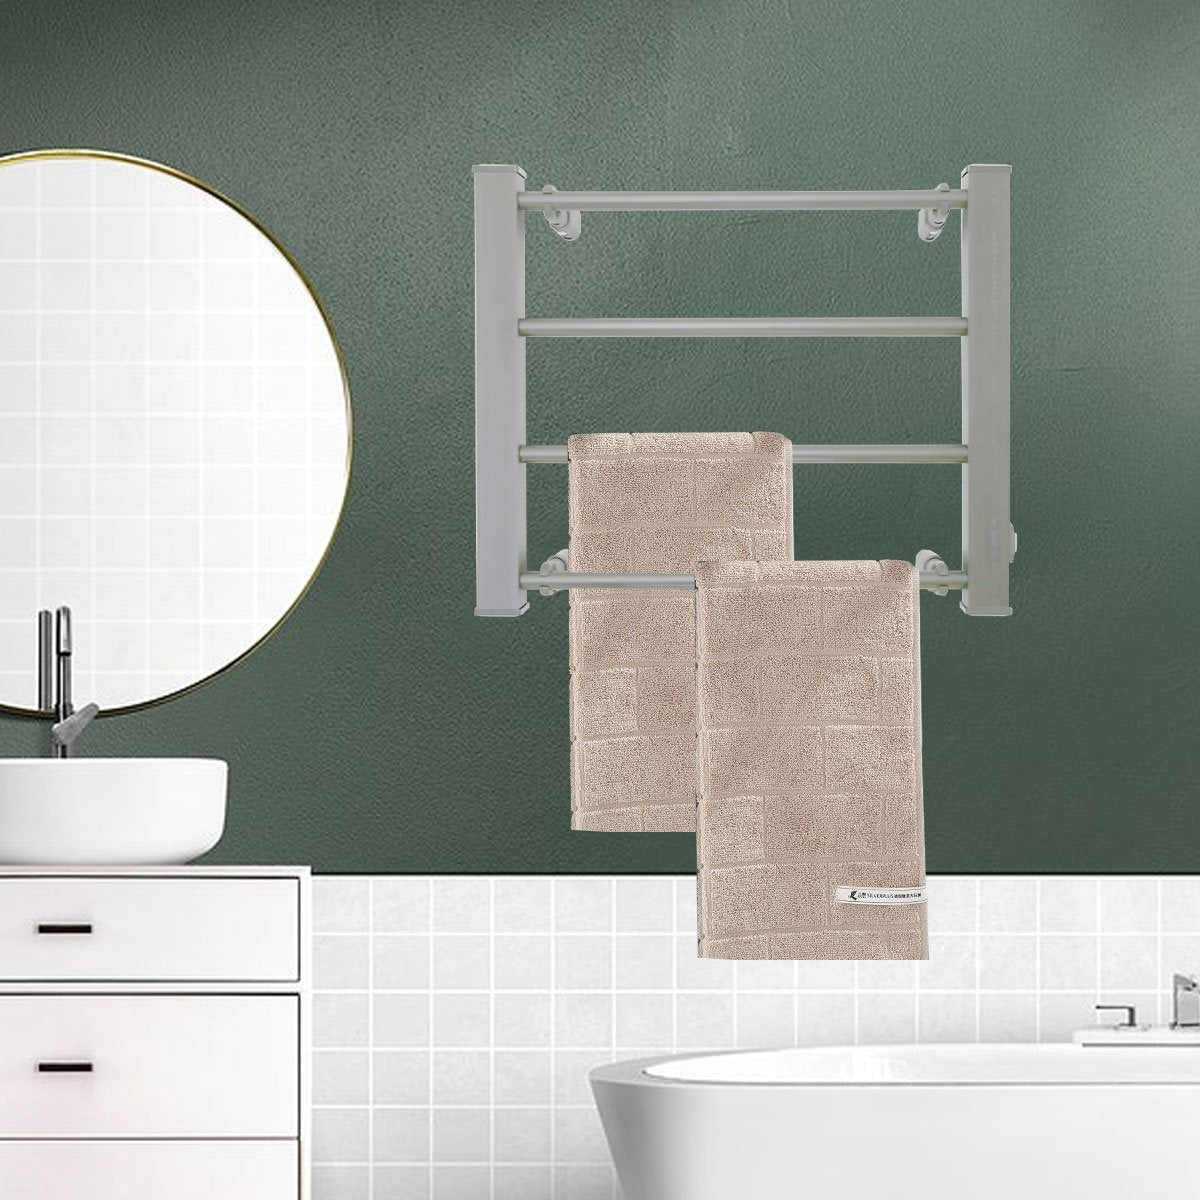 Pronti Heated Towel Rack Electric Bathroom Towel Rails Warmer Ev-60 -silver-Home &amp; Garden &gt; Bathroom Accessories-PEROZ Accessories